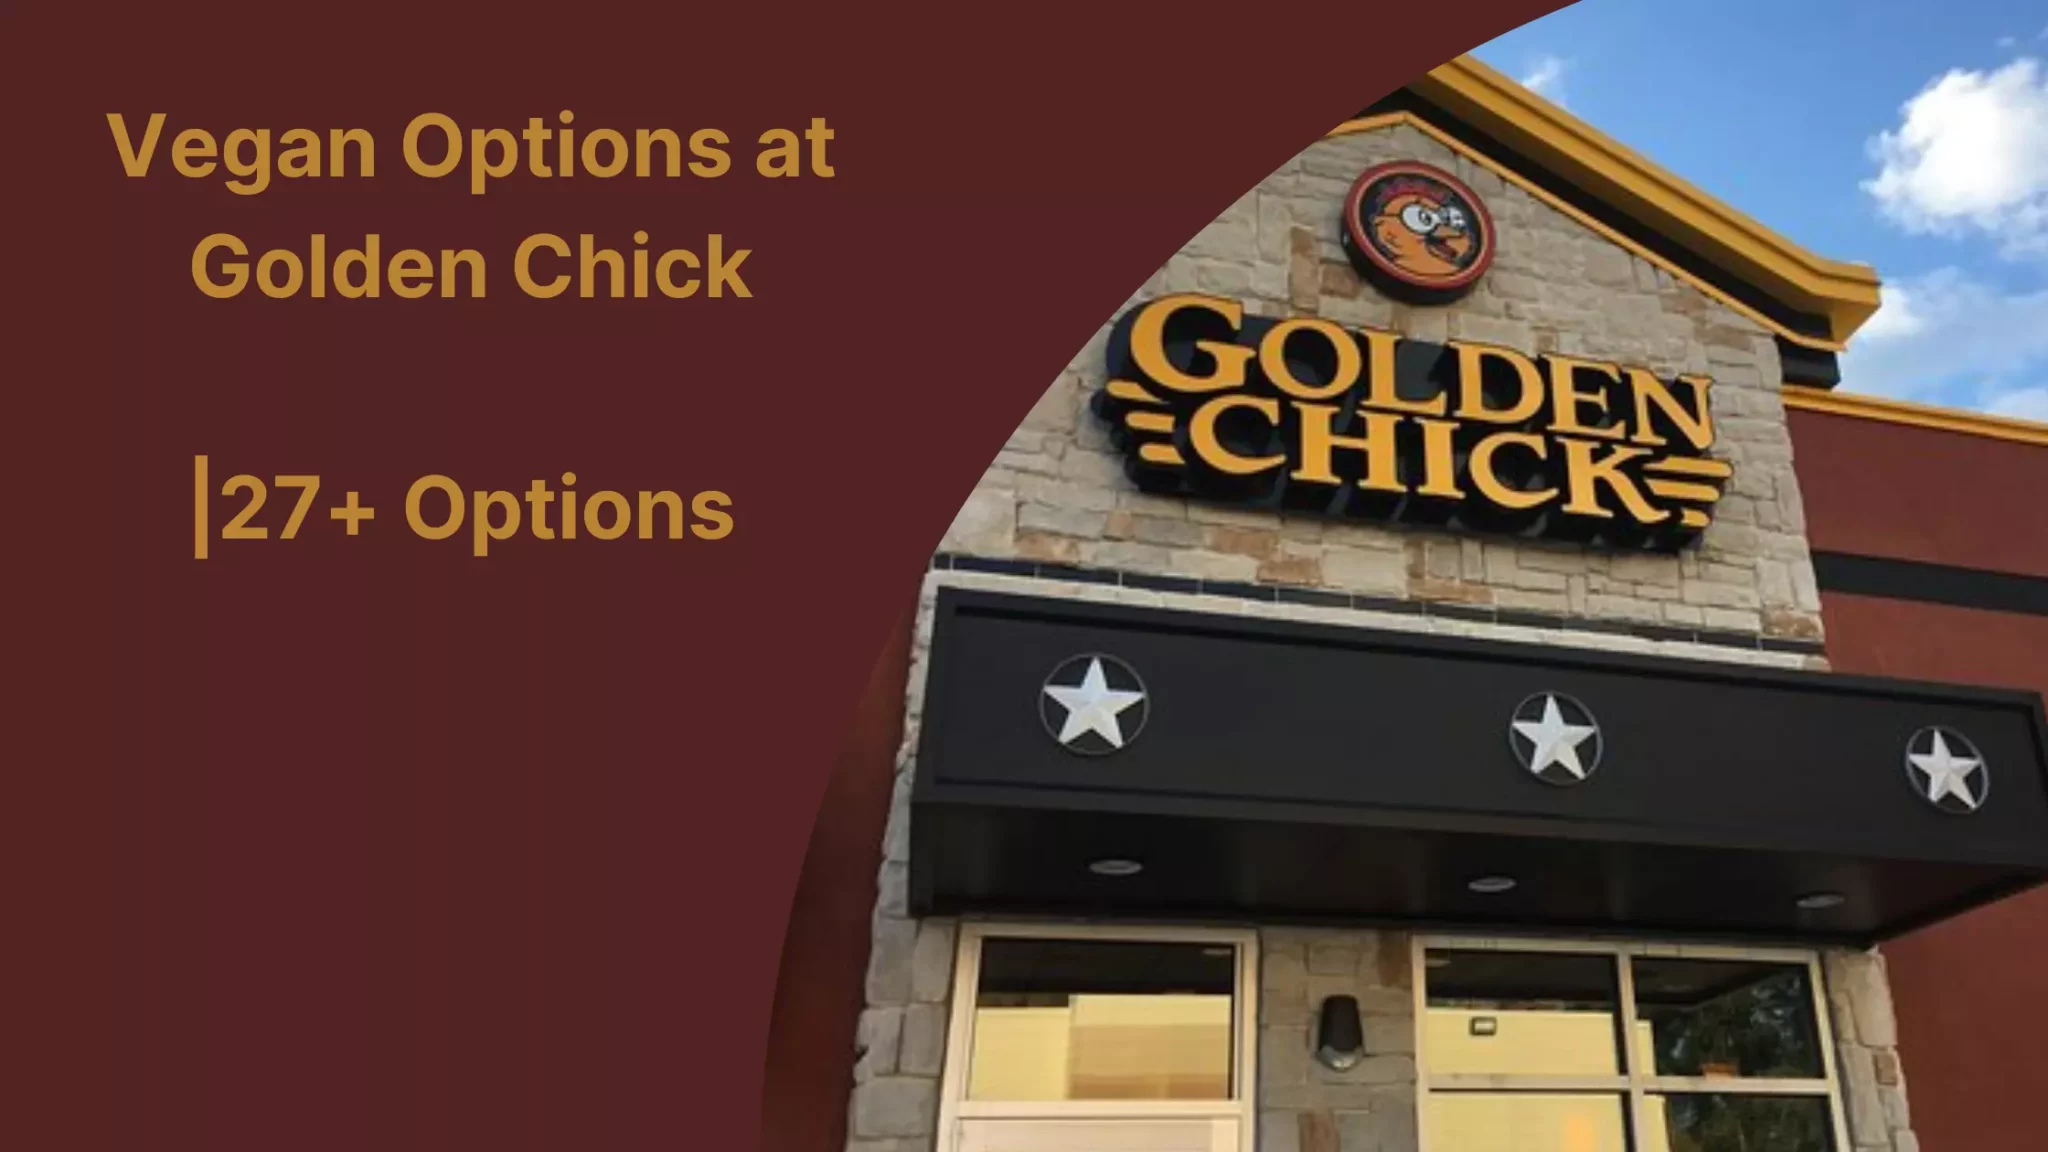 Vegan Options at Golden Chick